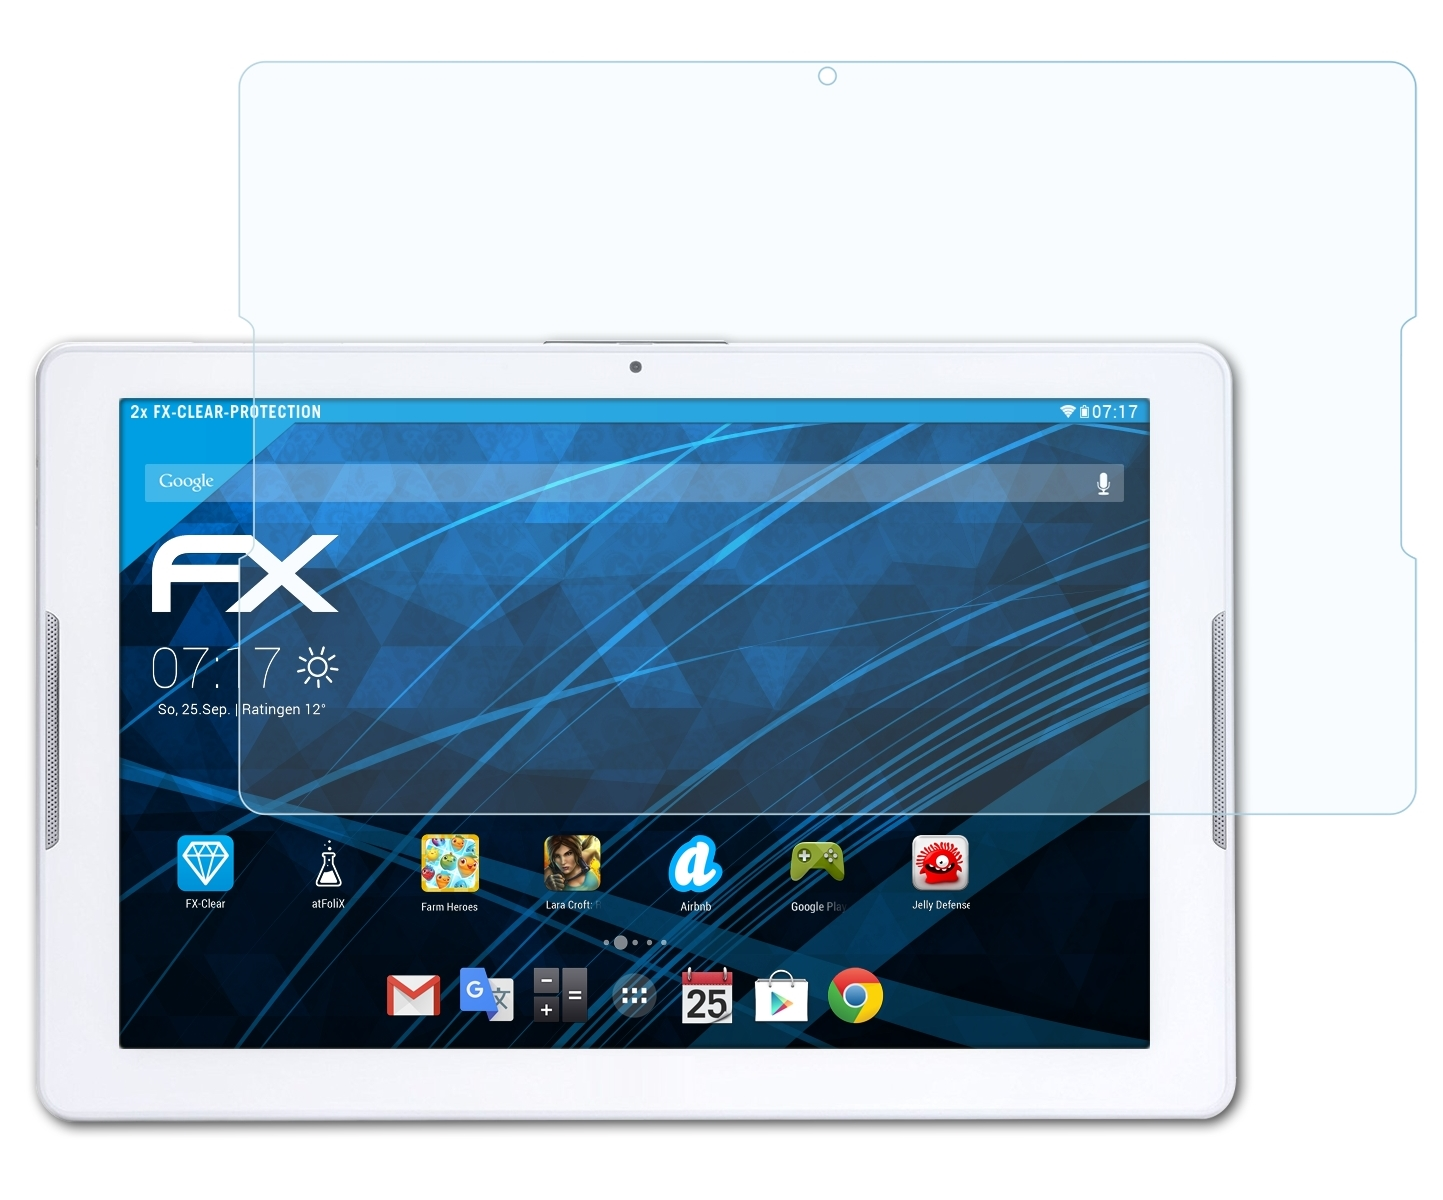 (B3-A30)) FX-Clear Iconia Displayschutz(für ATFOLIX Acer One 10 2x